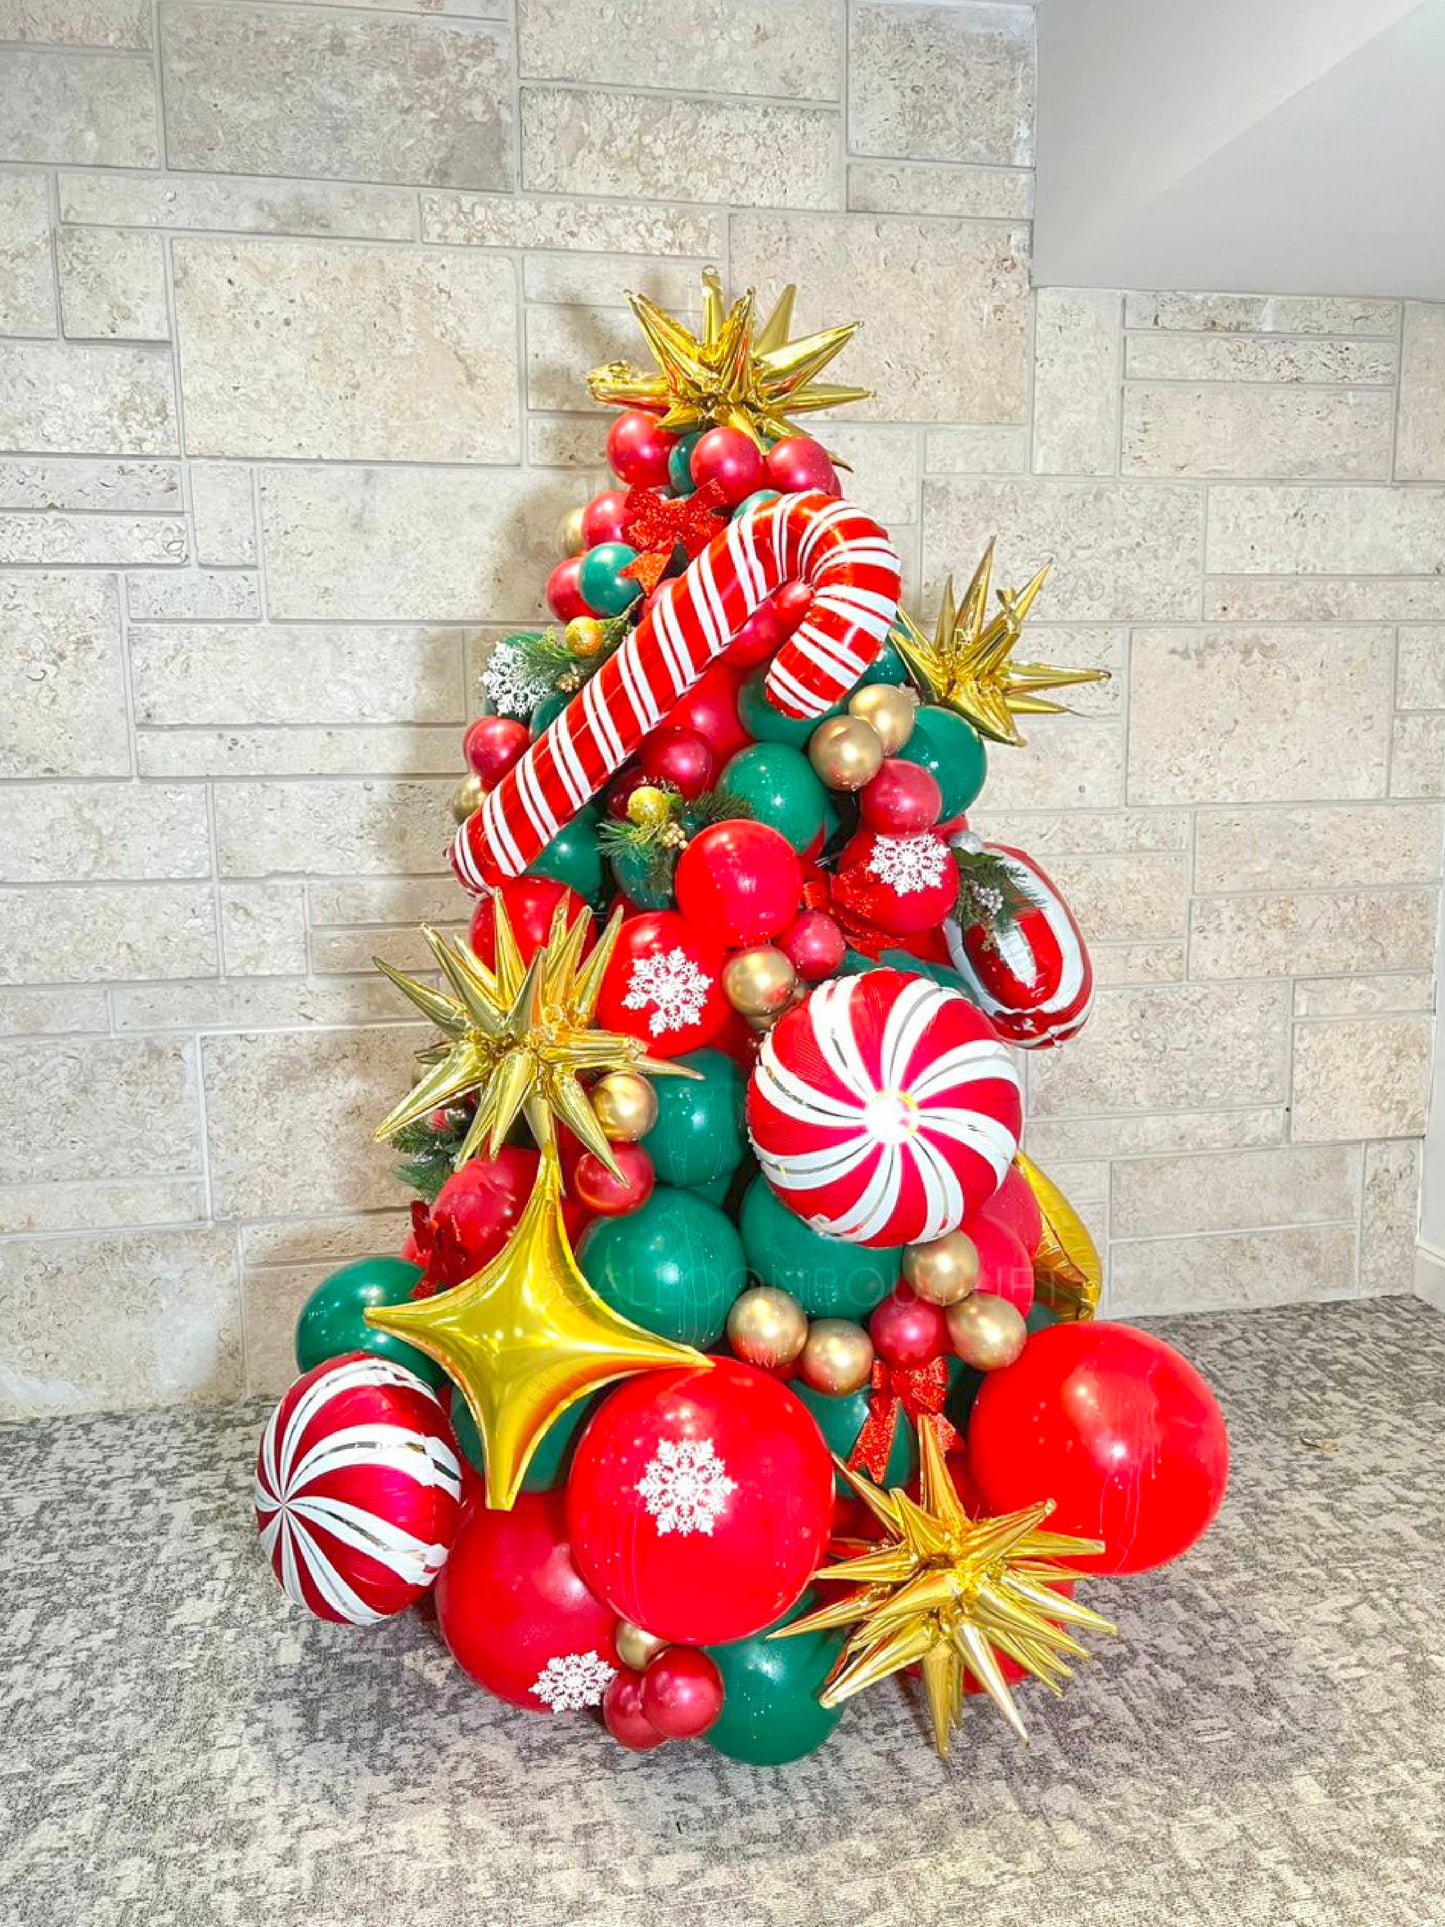 Amazing Christmas Tree